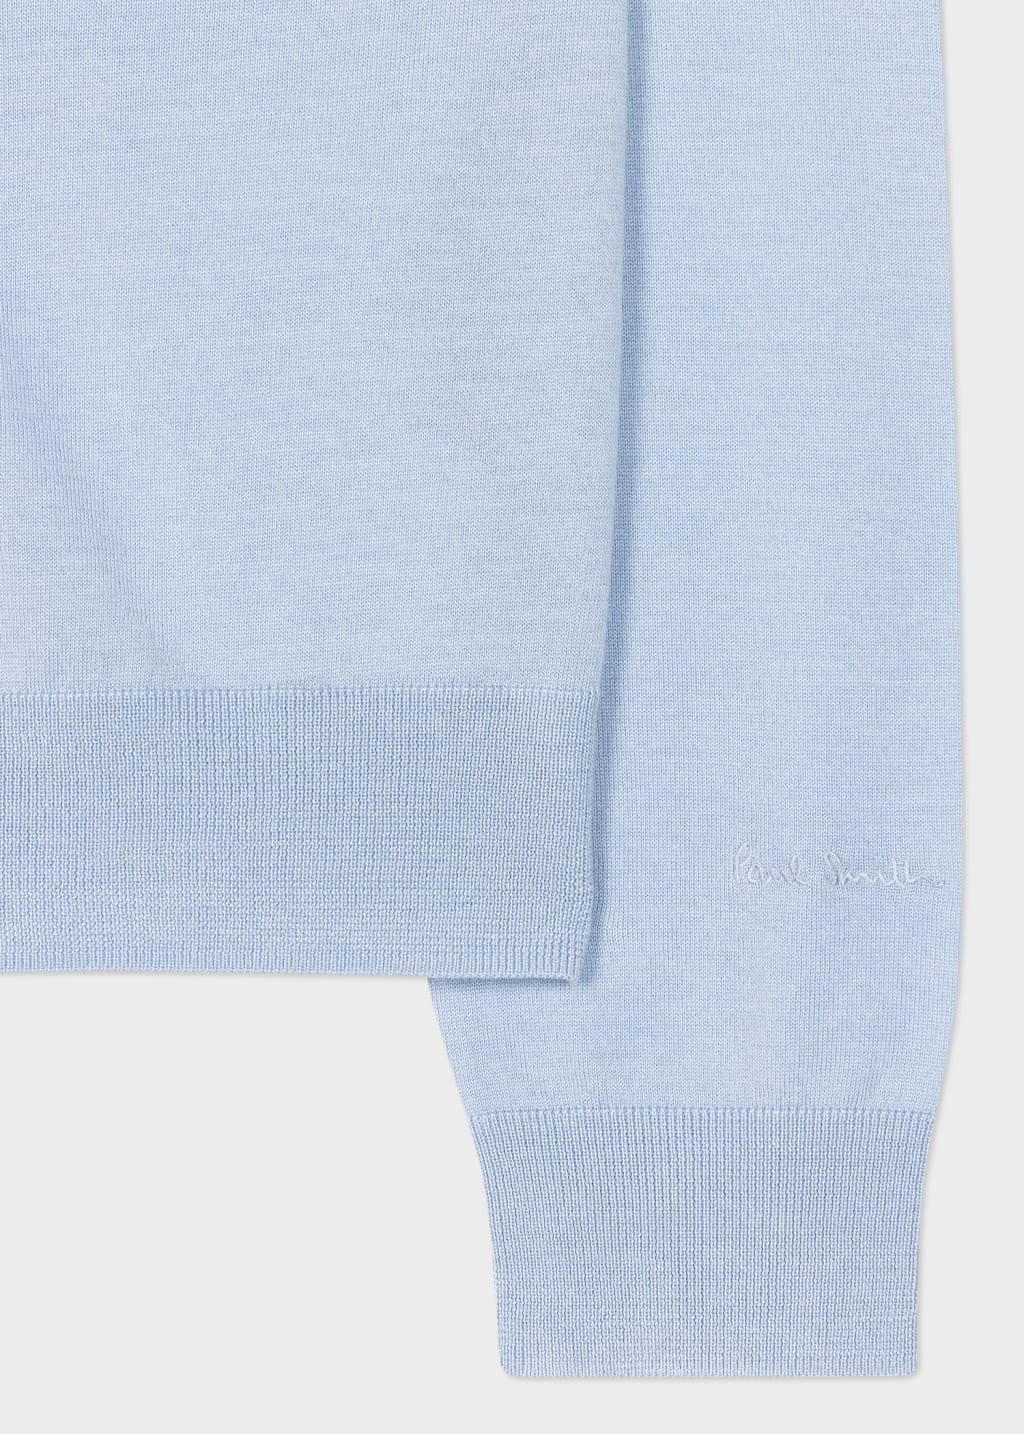 Detail View - Pale Blue Merino Wool Sweater Paul Smith